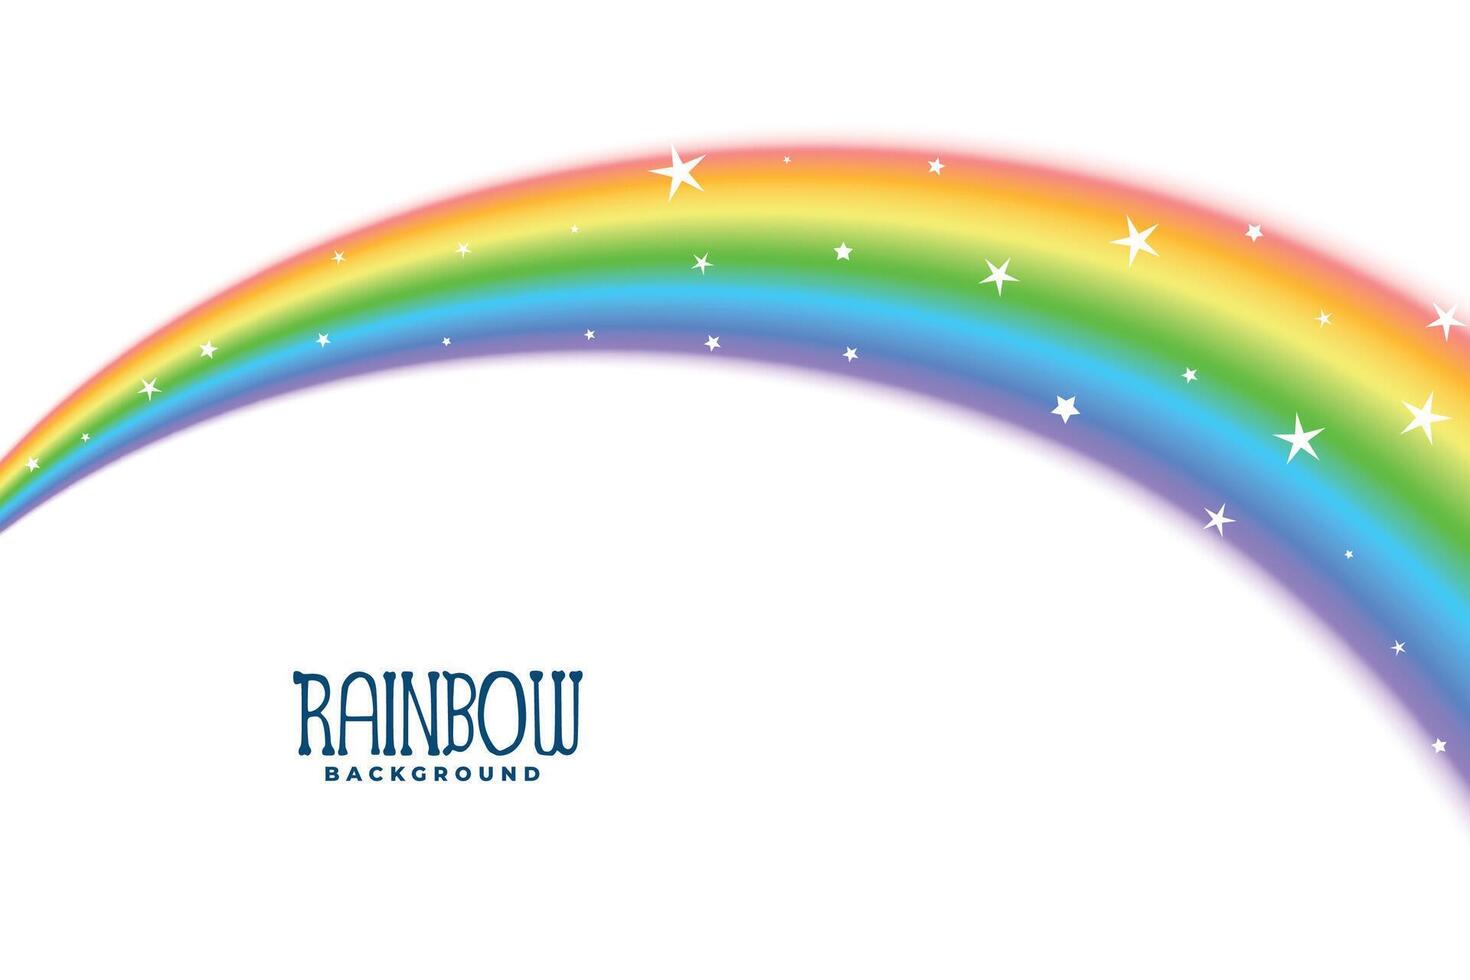 wavy curve rainbow with stars background vector